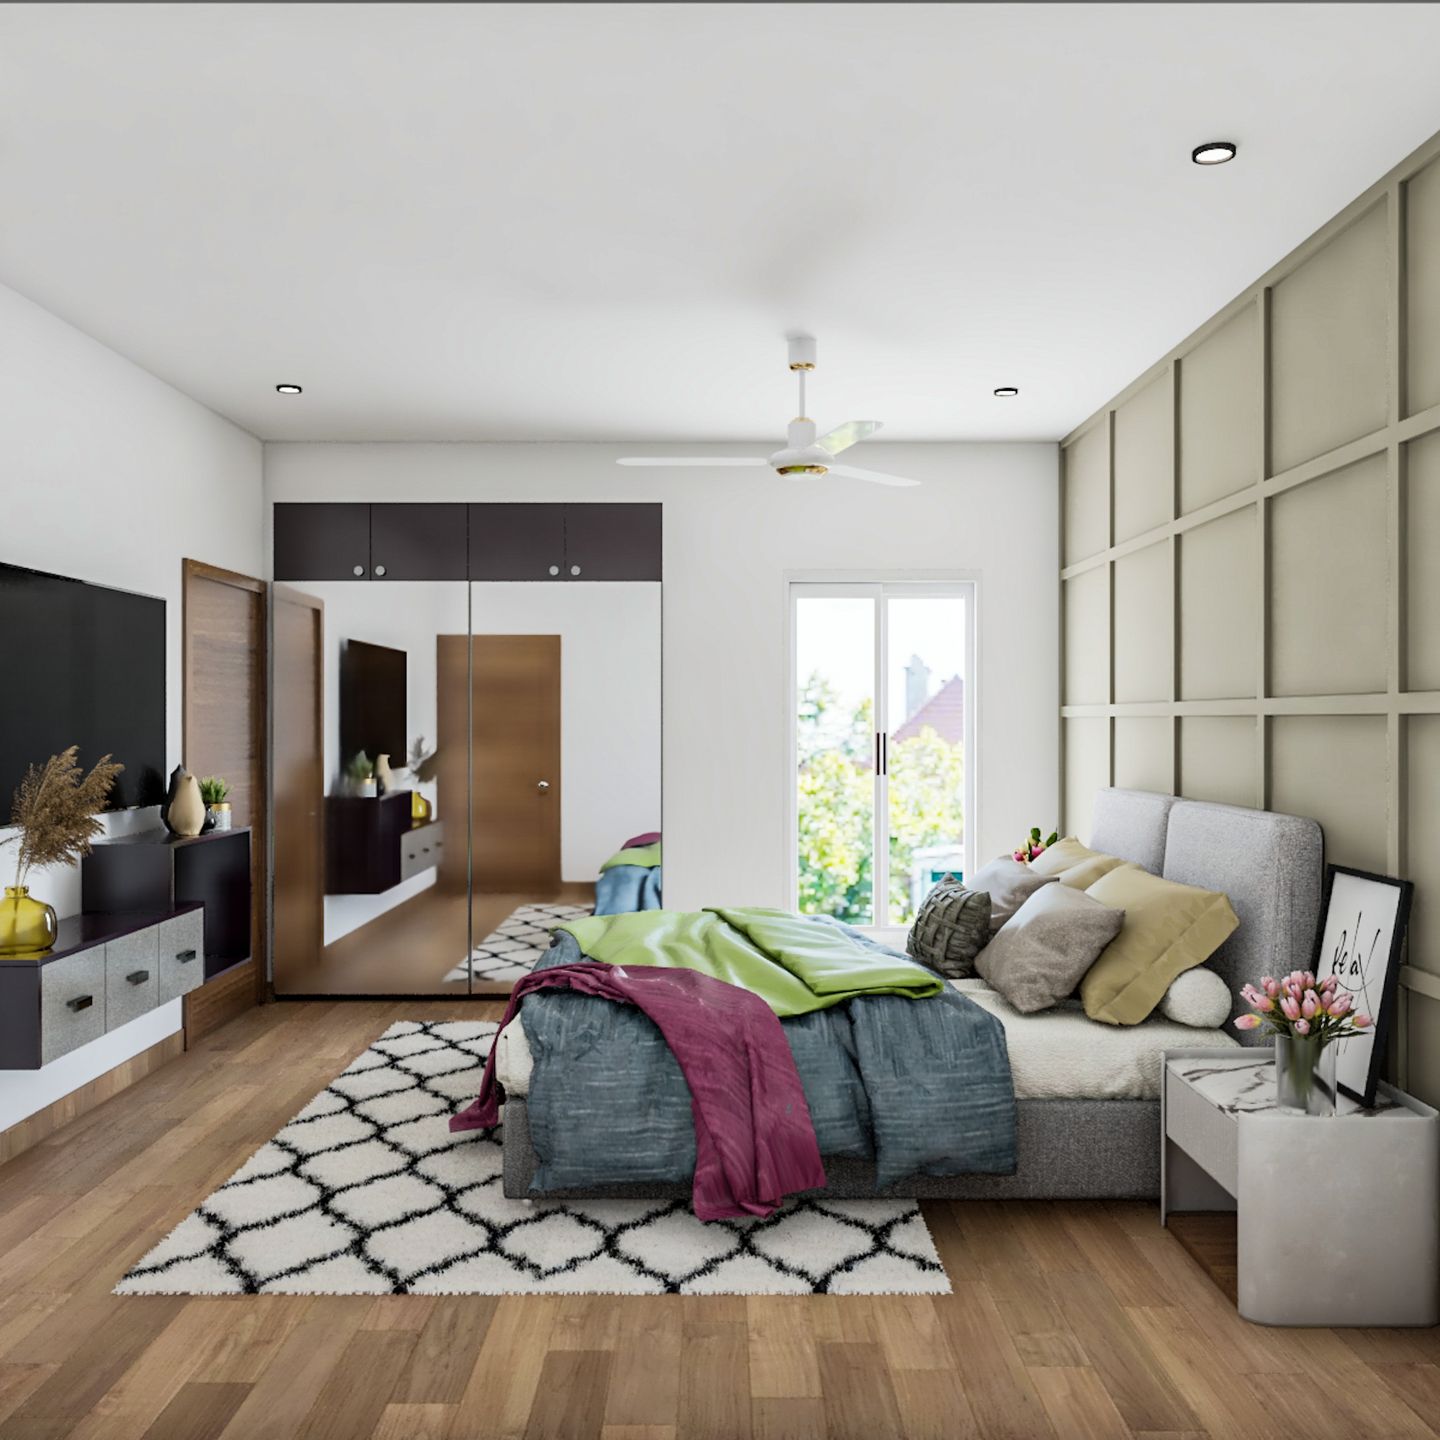 Modern Bedroom Design With Beige Wall Trims - Livspace